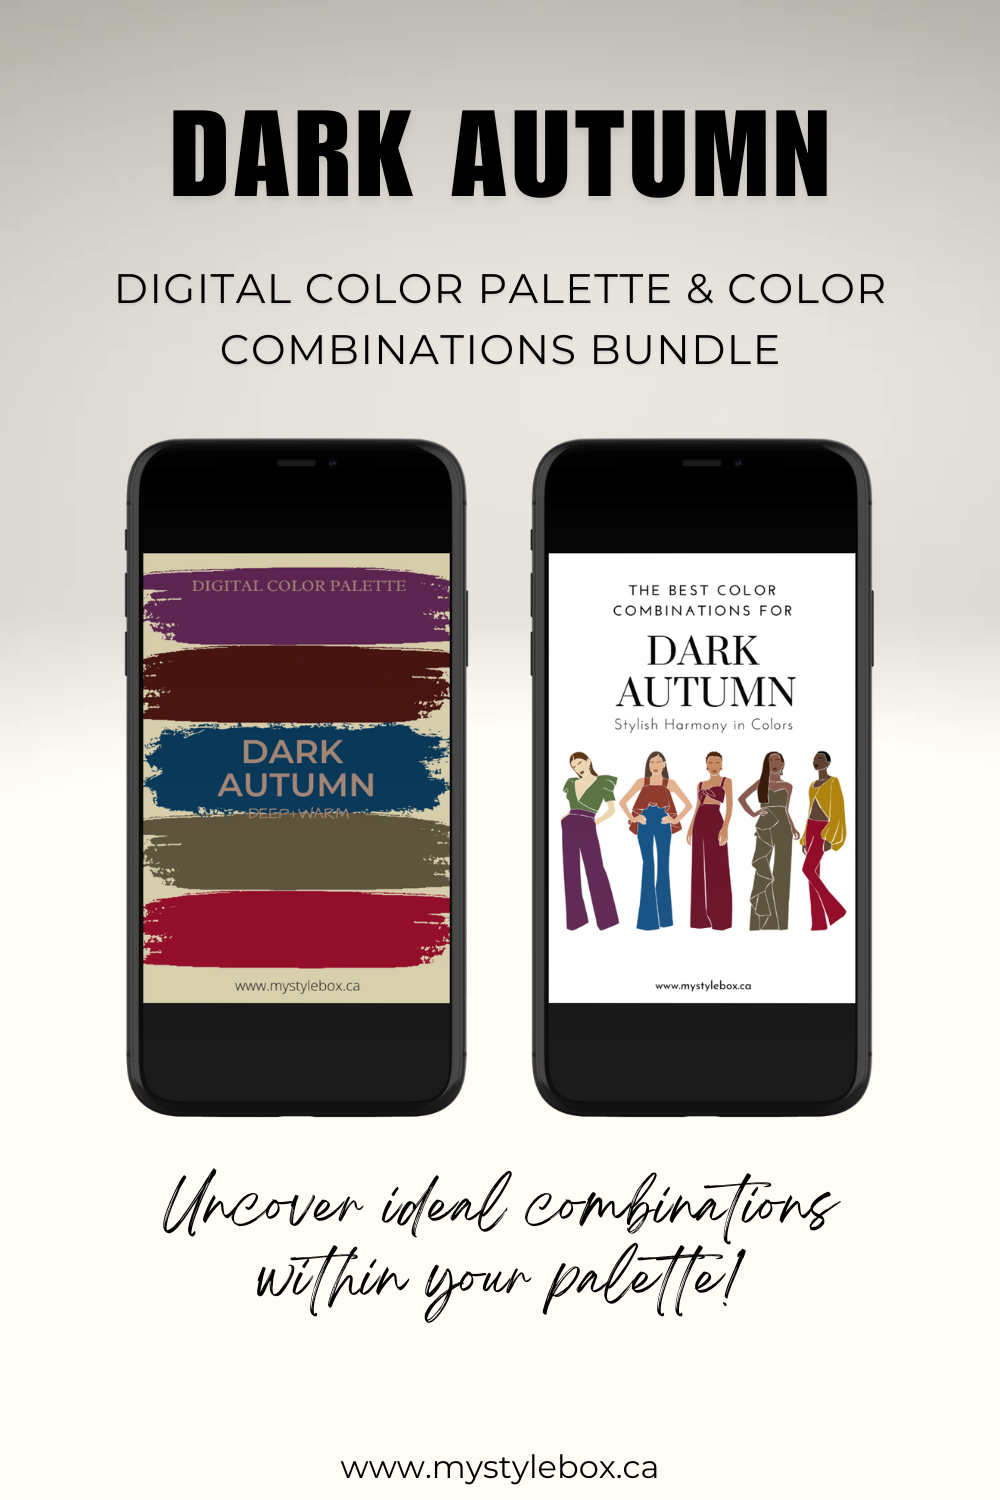 Dark (Deep) Autumn Season Digital Color Palette and Color Combinations